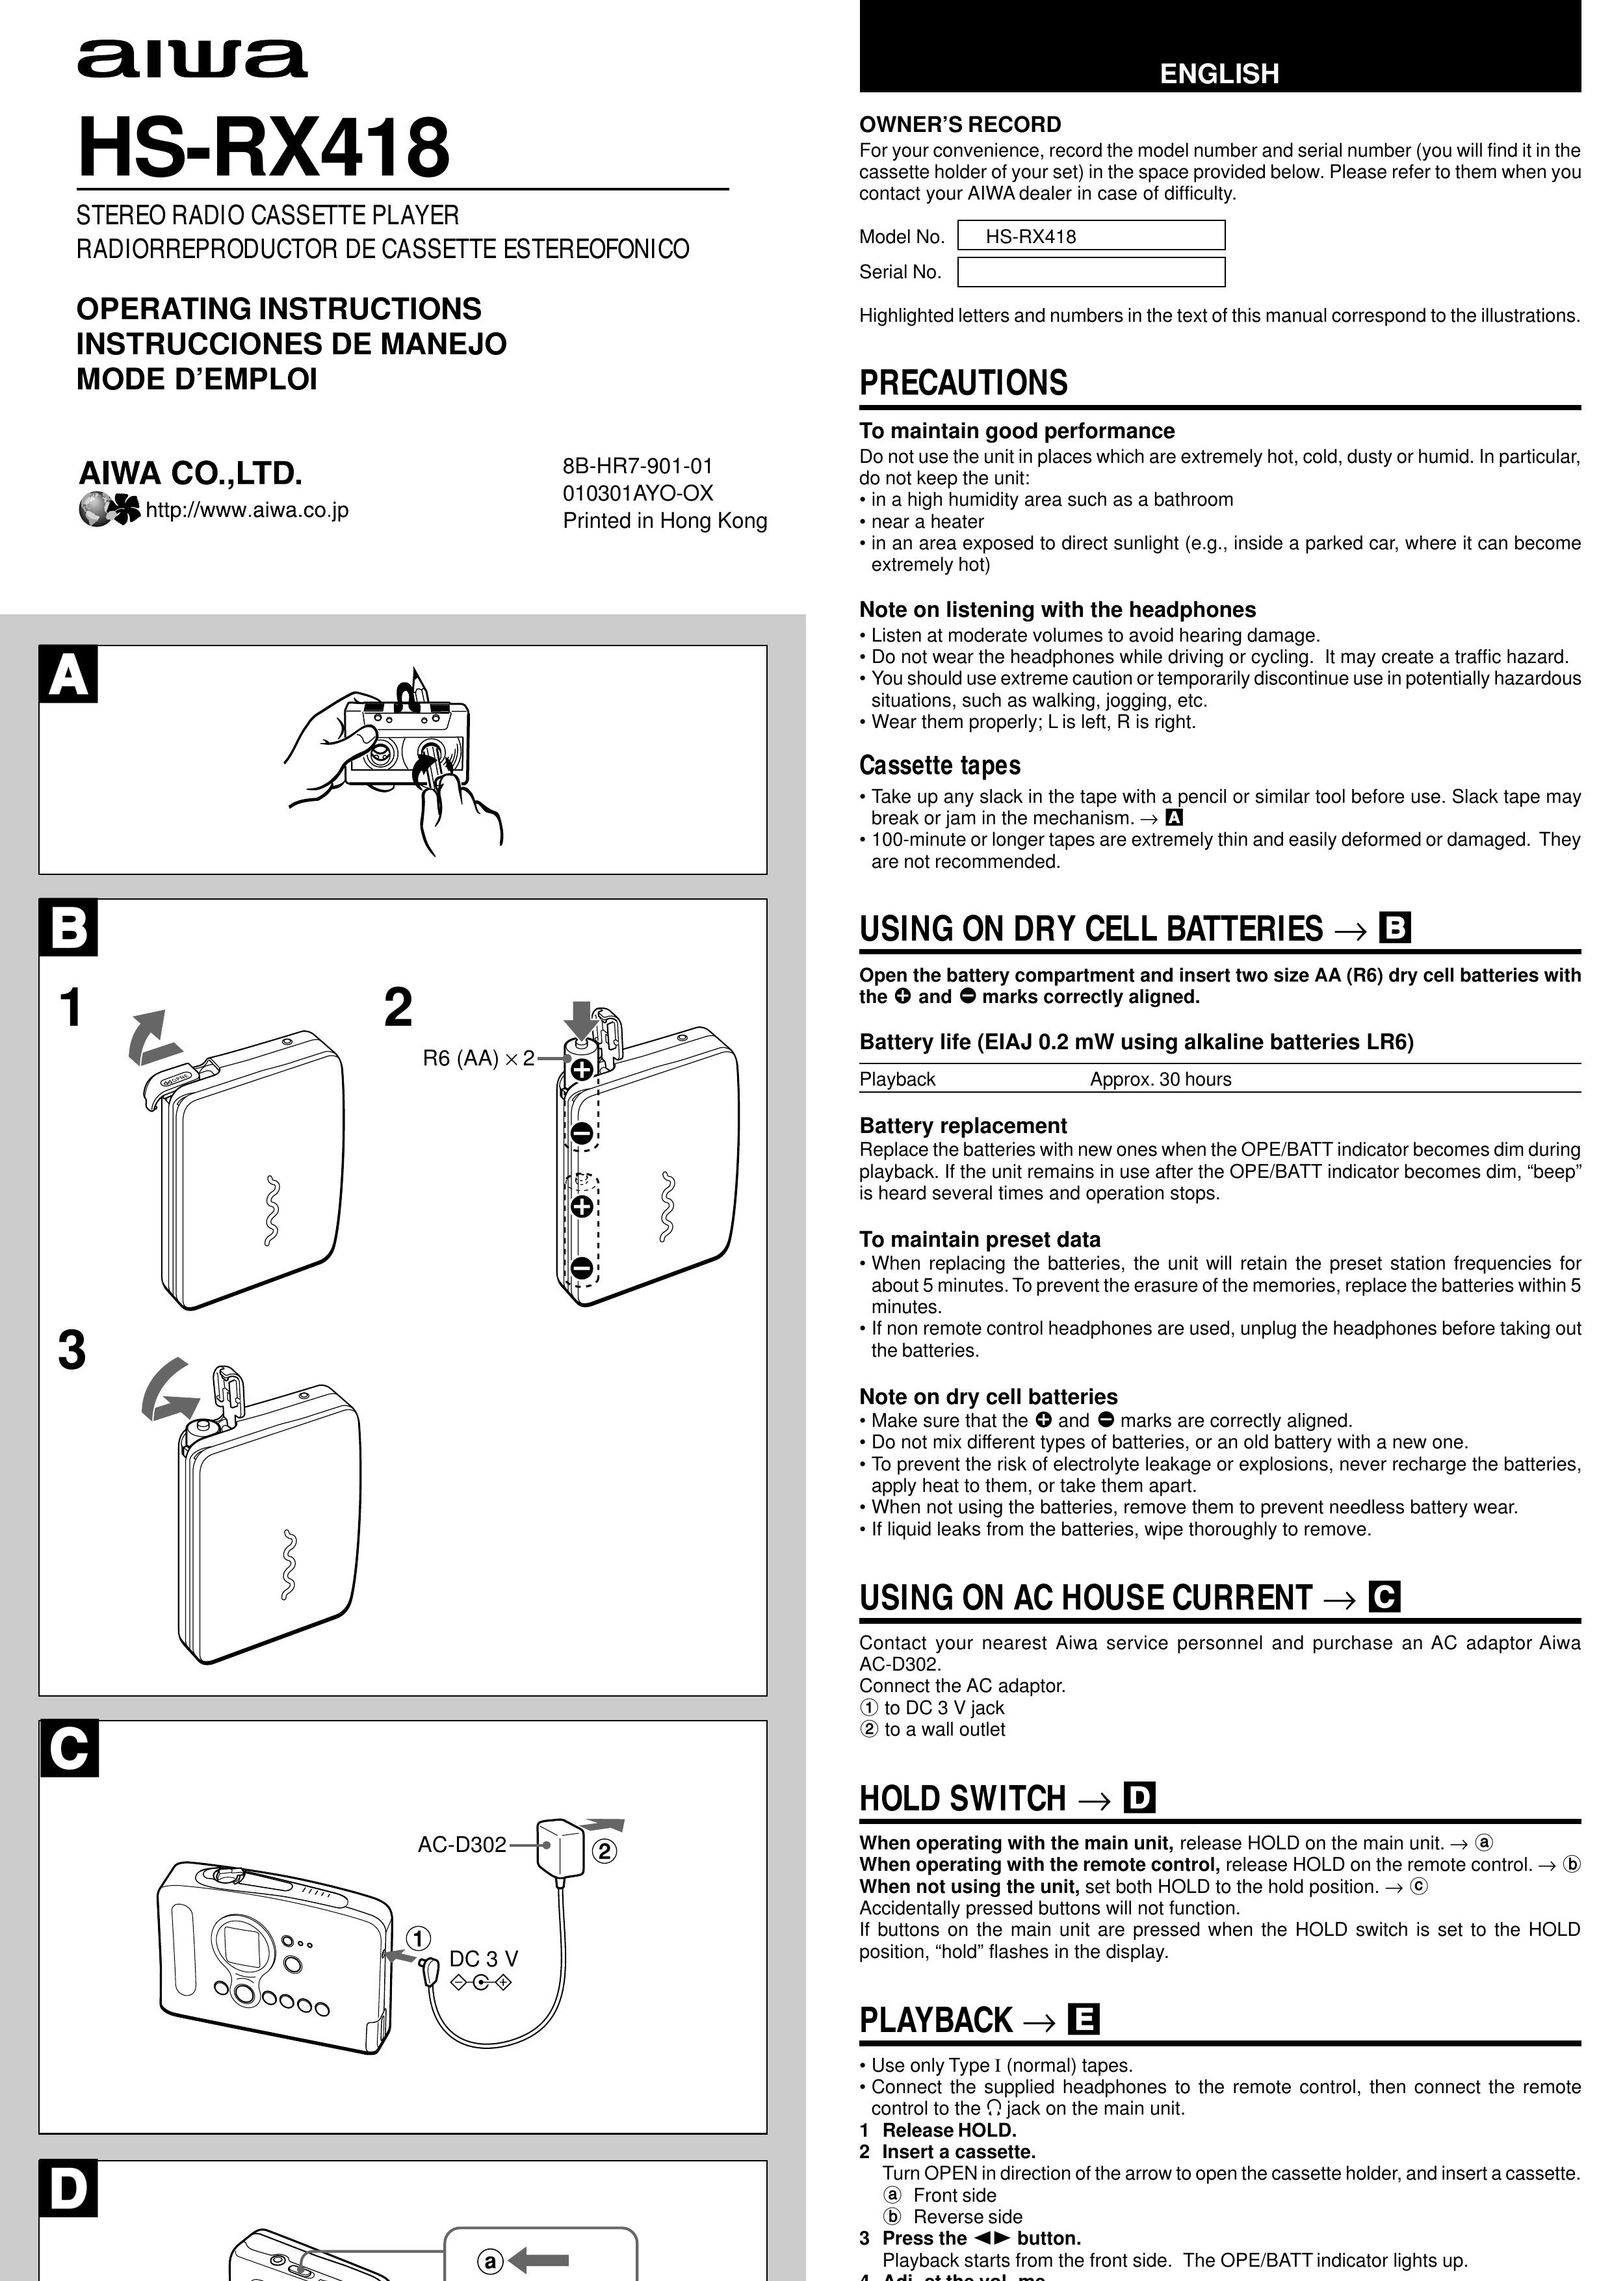 Aiwa HS-RX418 CD Player User Manual